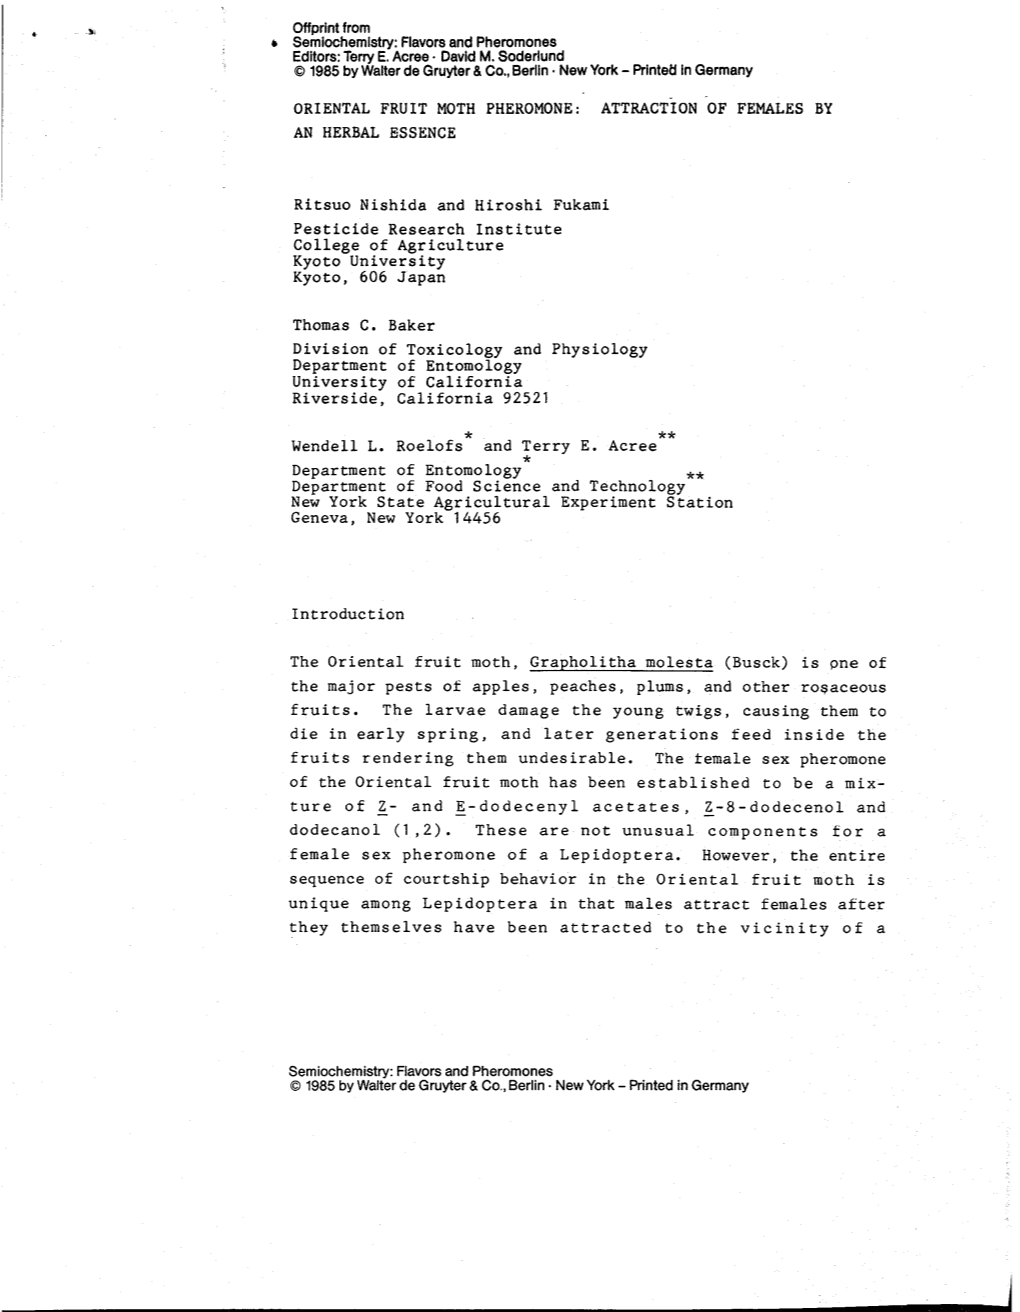 506Nishidaetal1985.Pdf PDF Document, 604.0 KB